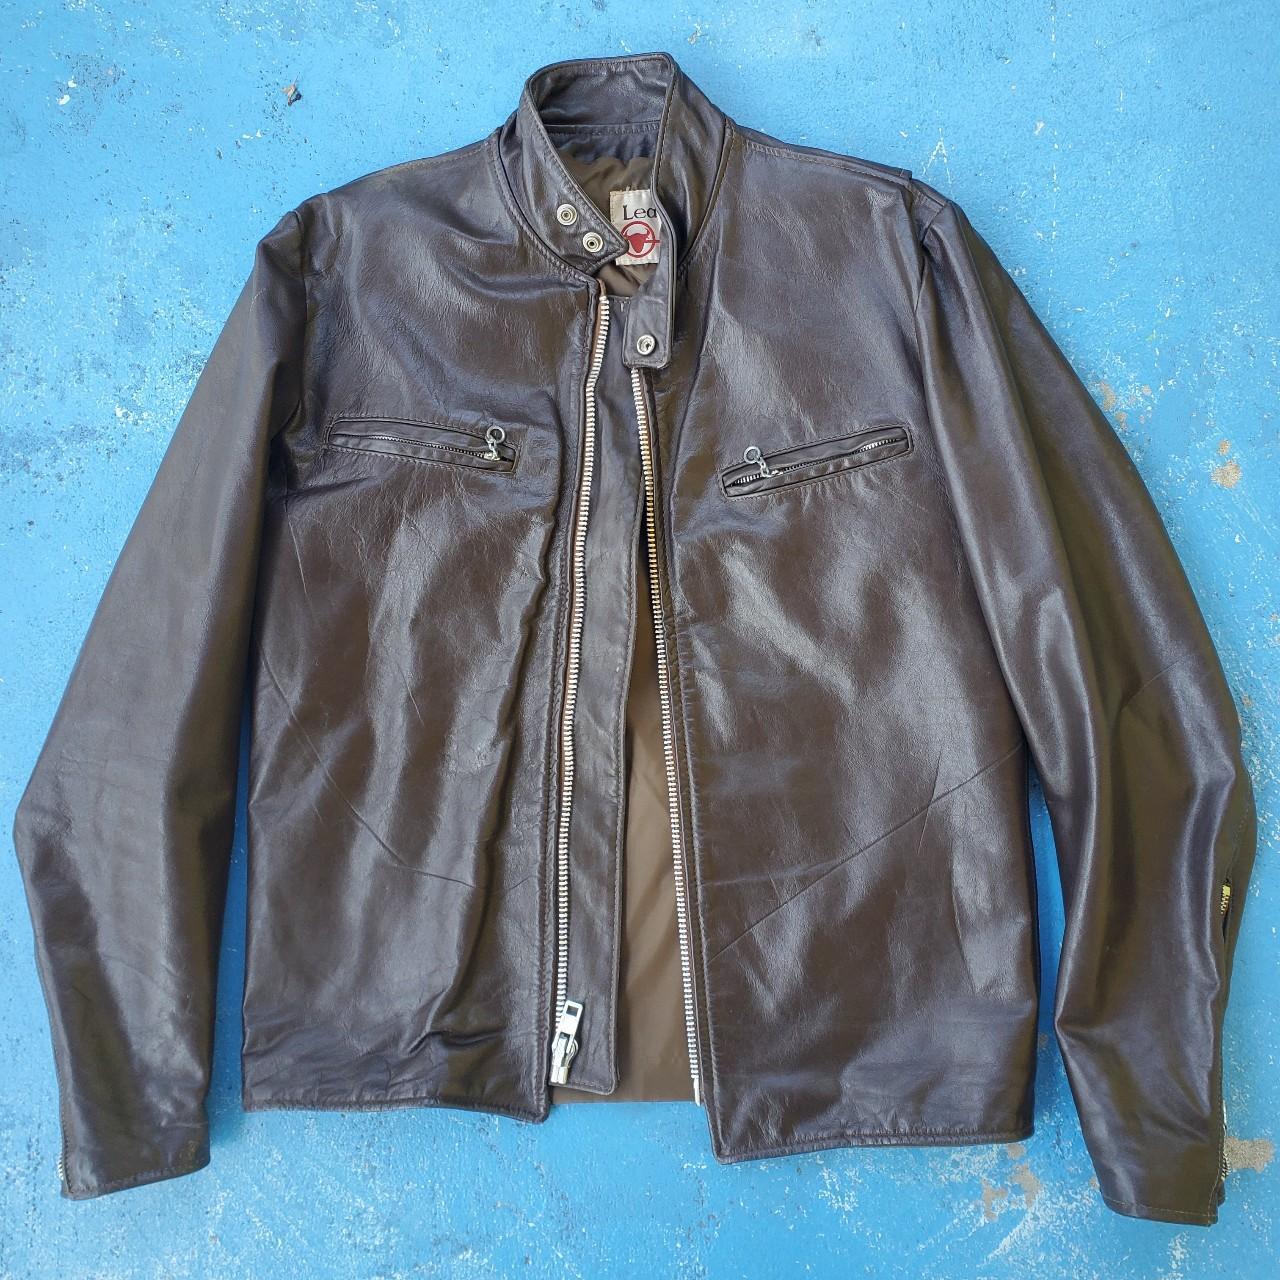 Vintage leather jacket 70s 80s size 38 tall genuine... - Depop